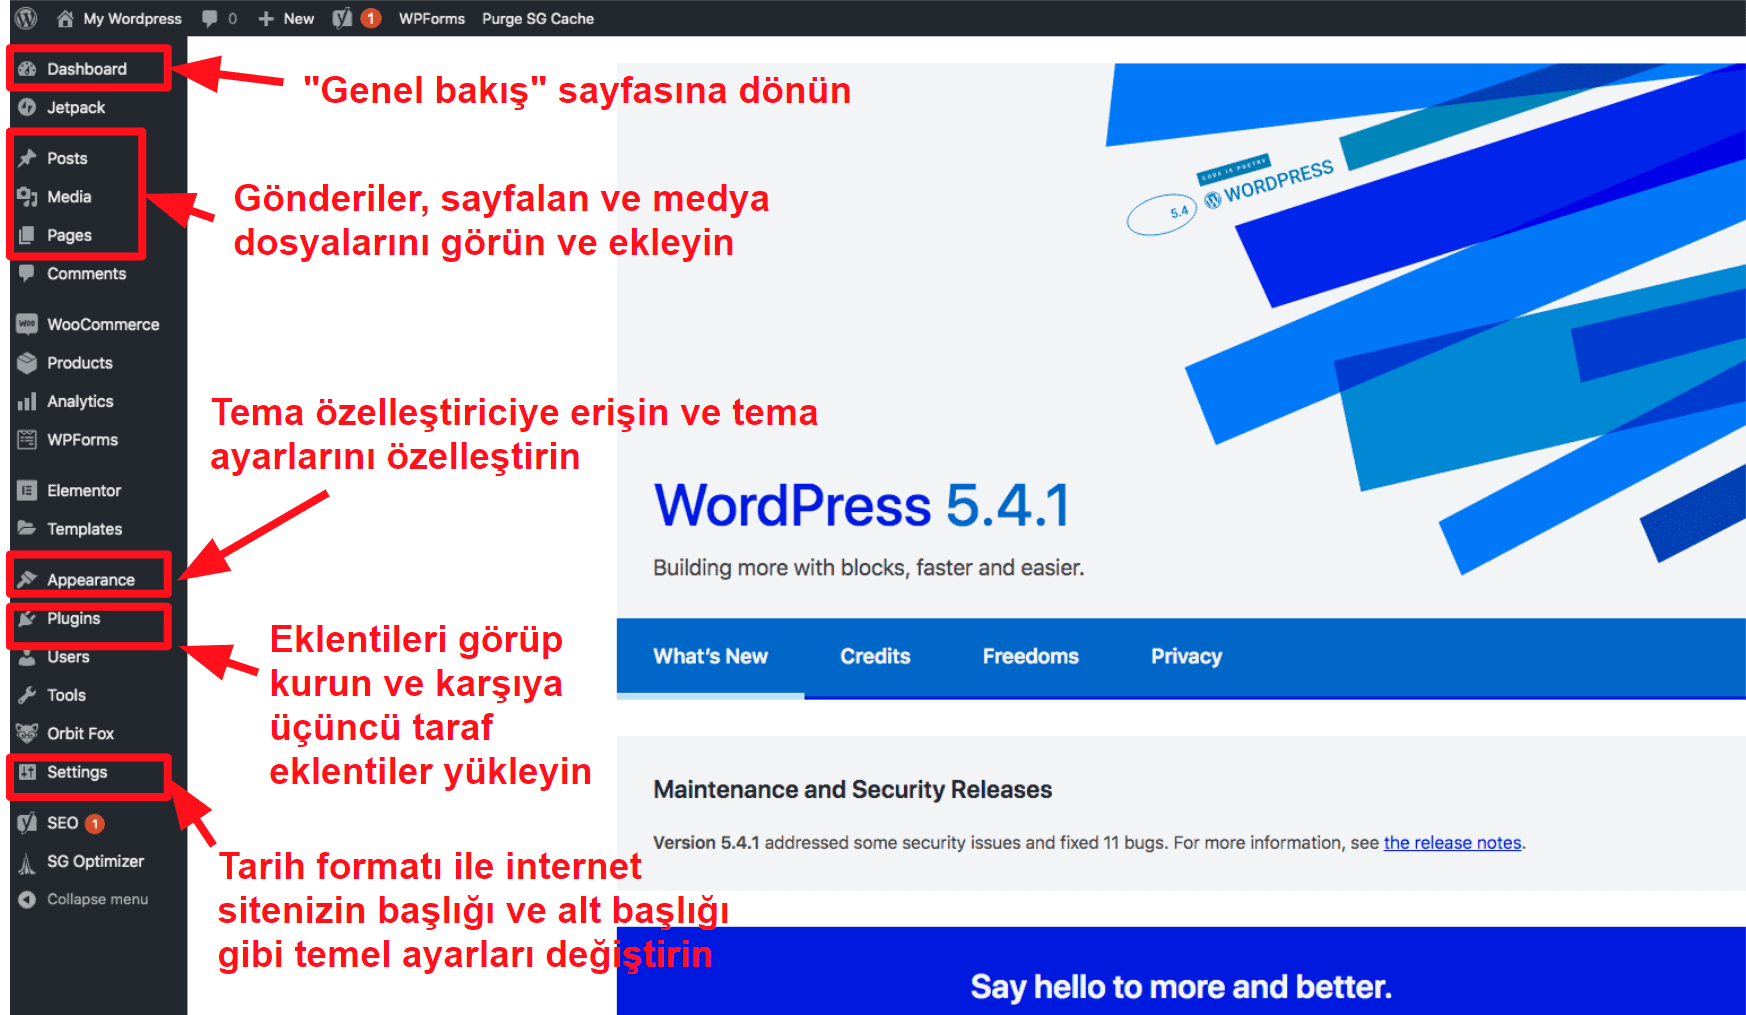 The WordPress dashboard TR16